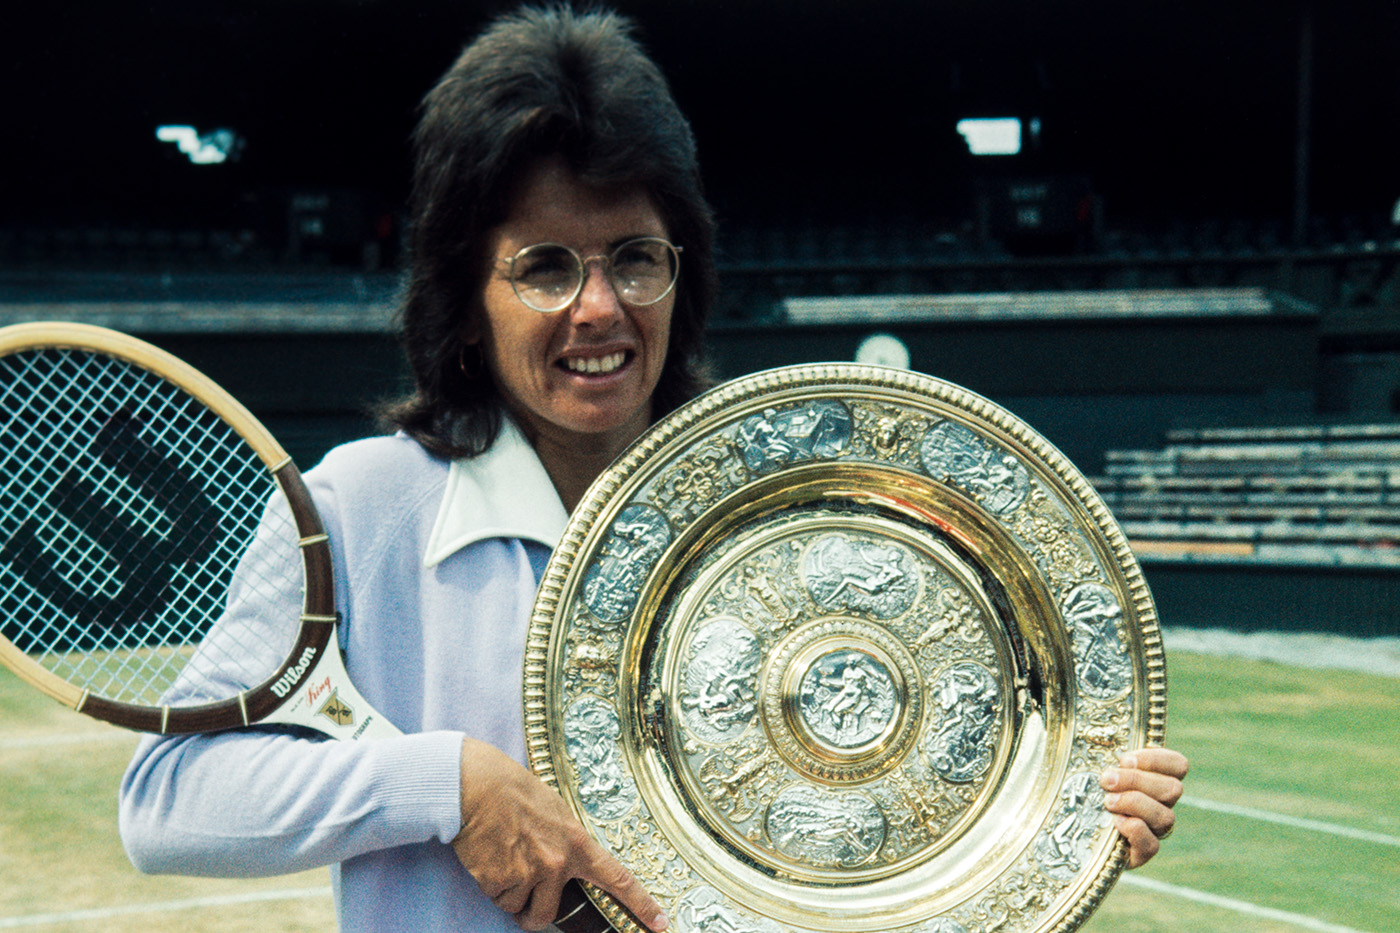 King Tennis: Billie Jean King’s Legacy